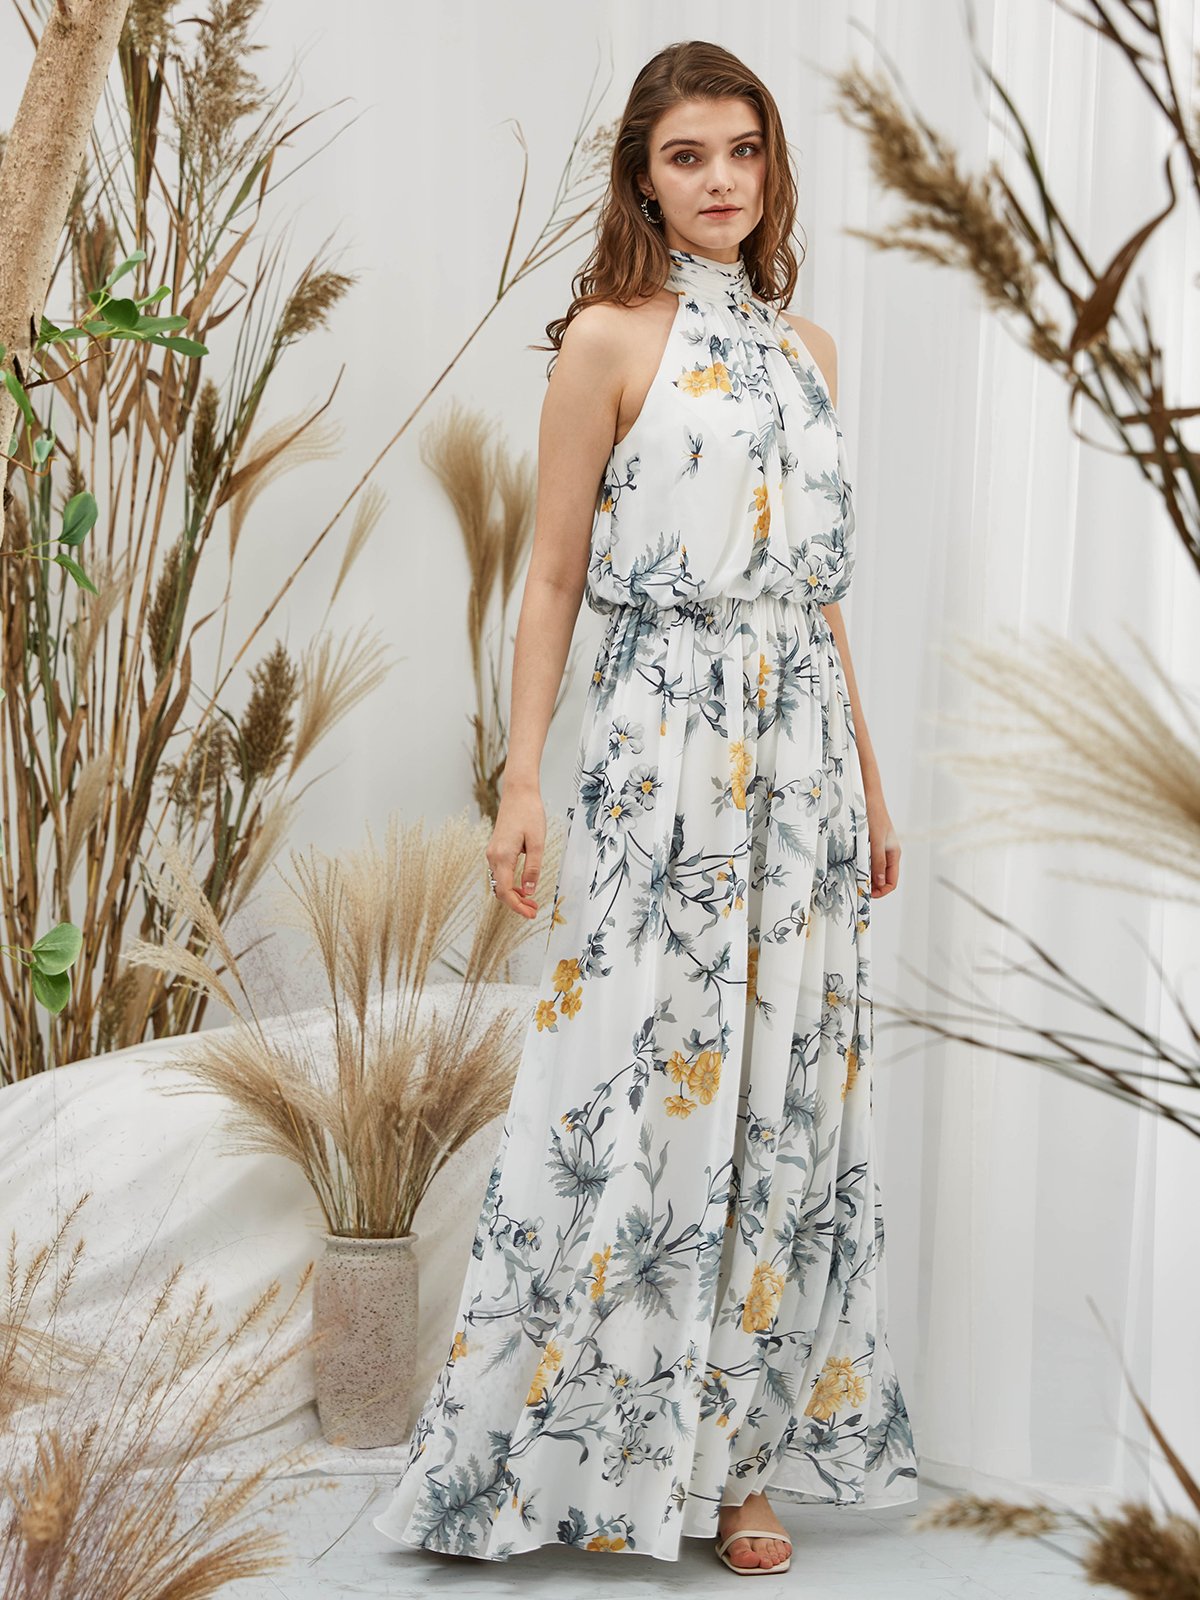 Halter High Neck Chiffon Print Floral Gray Tea Length Formal Gown